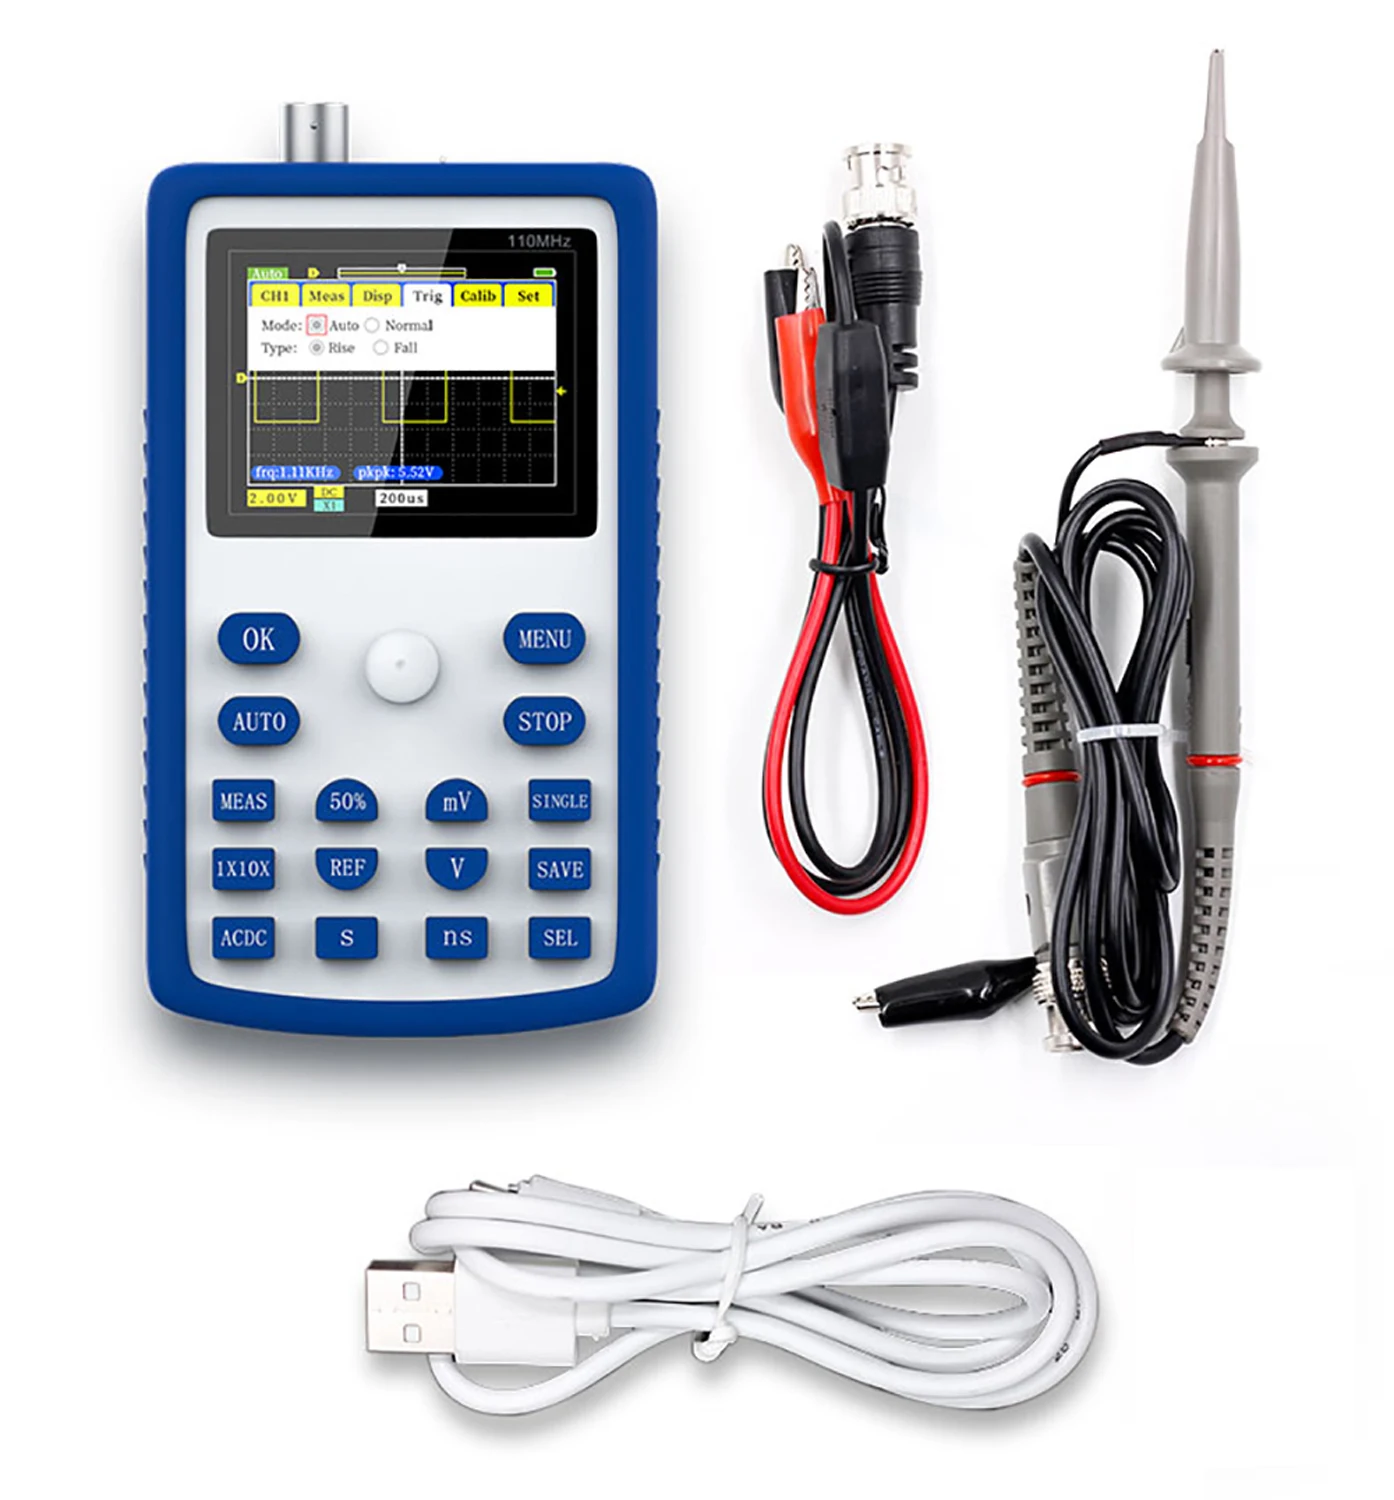 

FNIRSI-1C15 Handheld Portable Digital Oscilloscope 500MS/S Sampling Rate with 110MHz Bandwidth Square Wave USB DIY Oscilloscopes